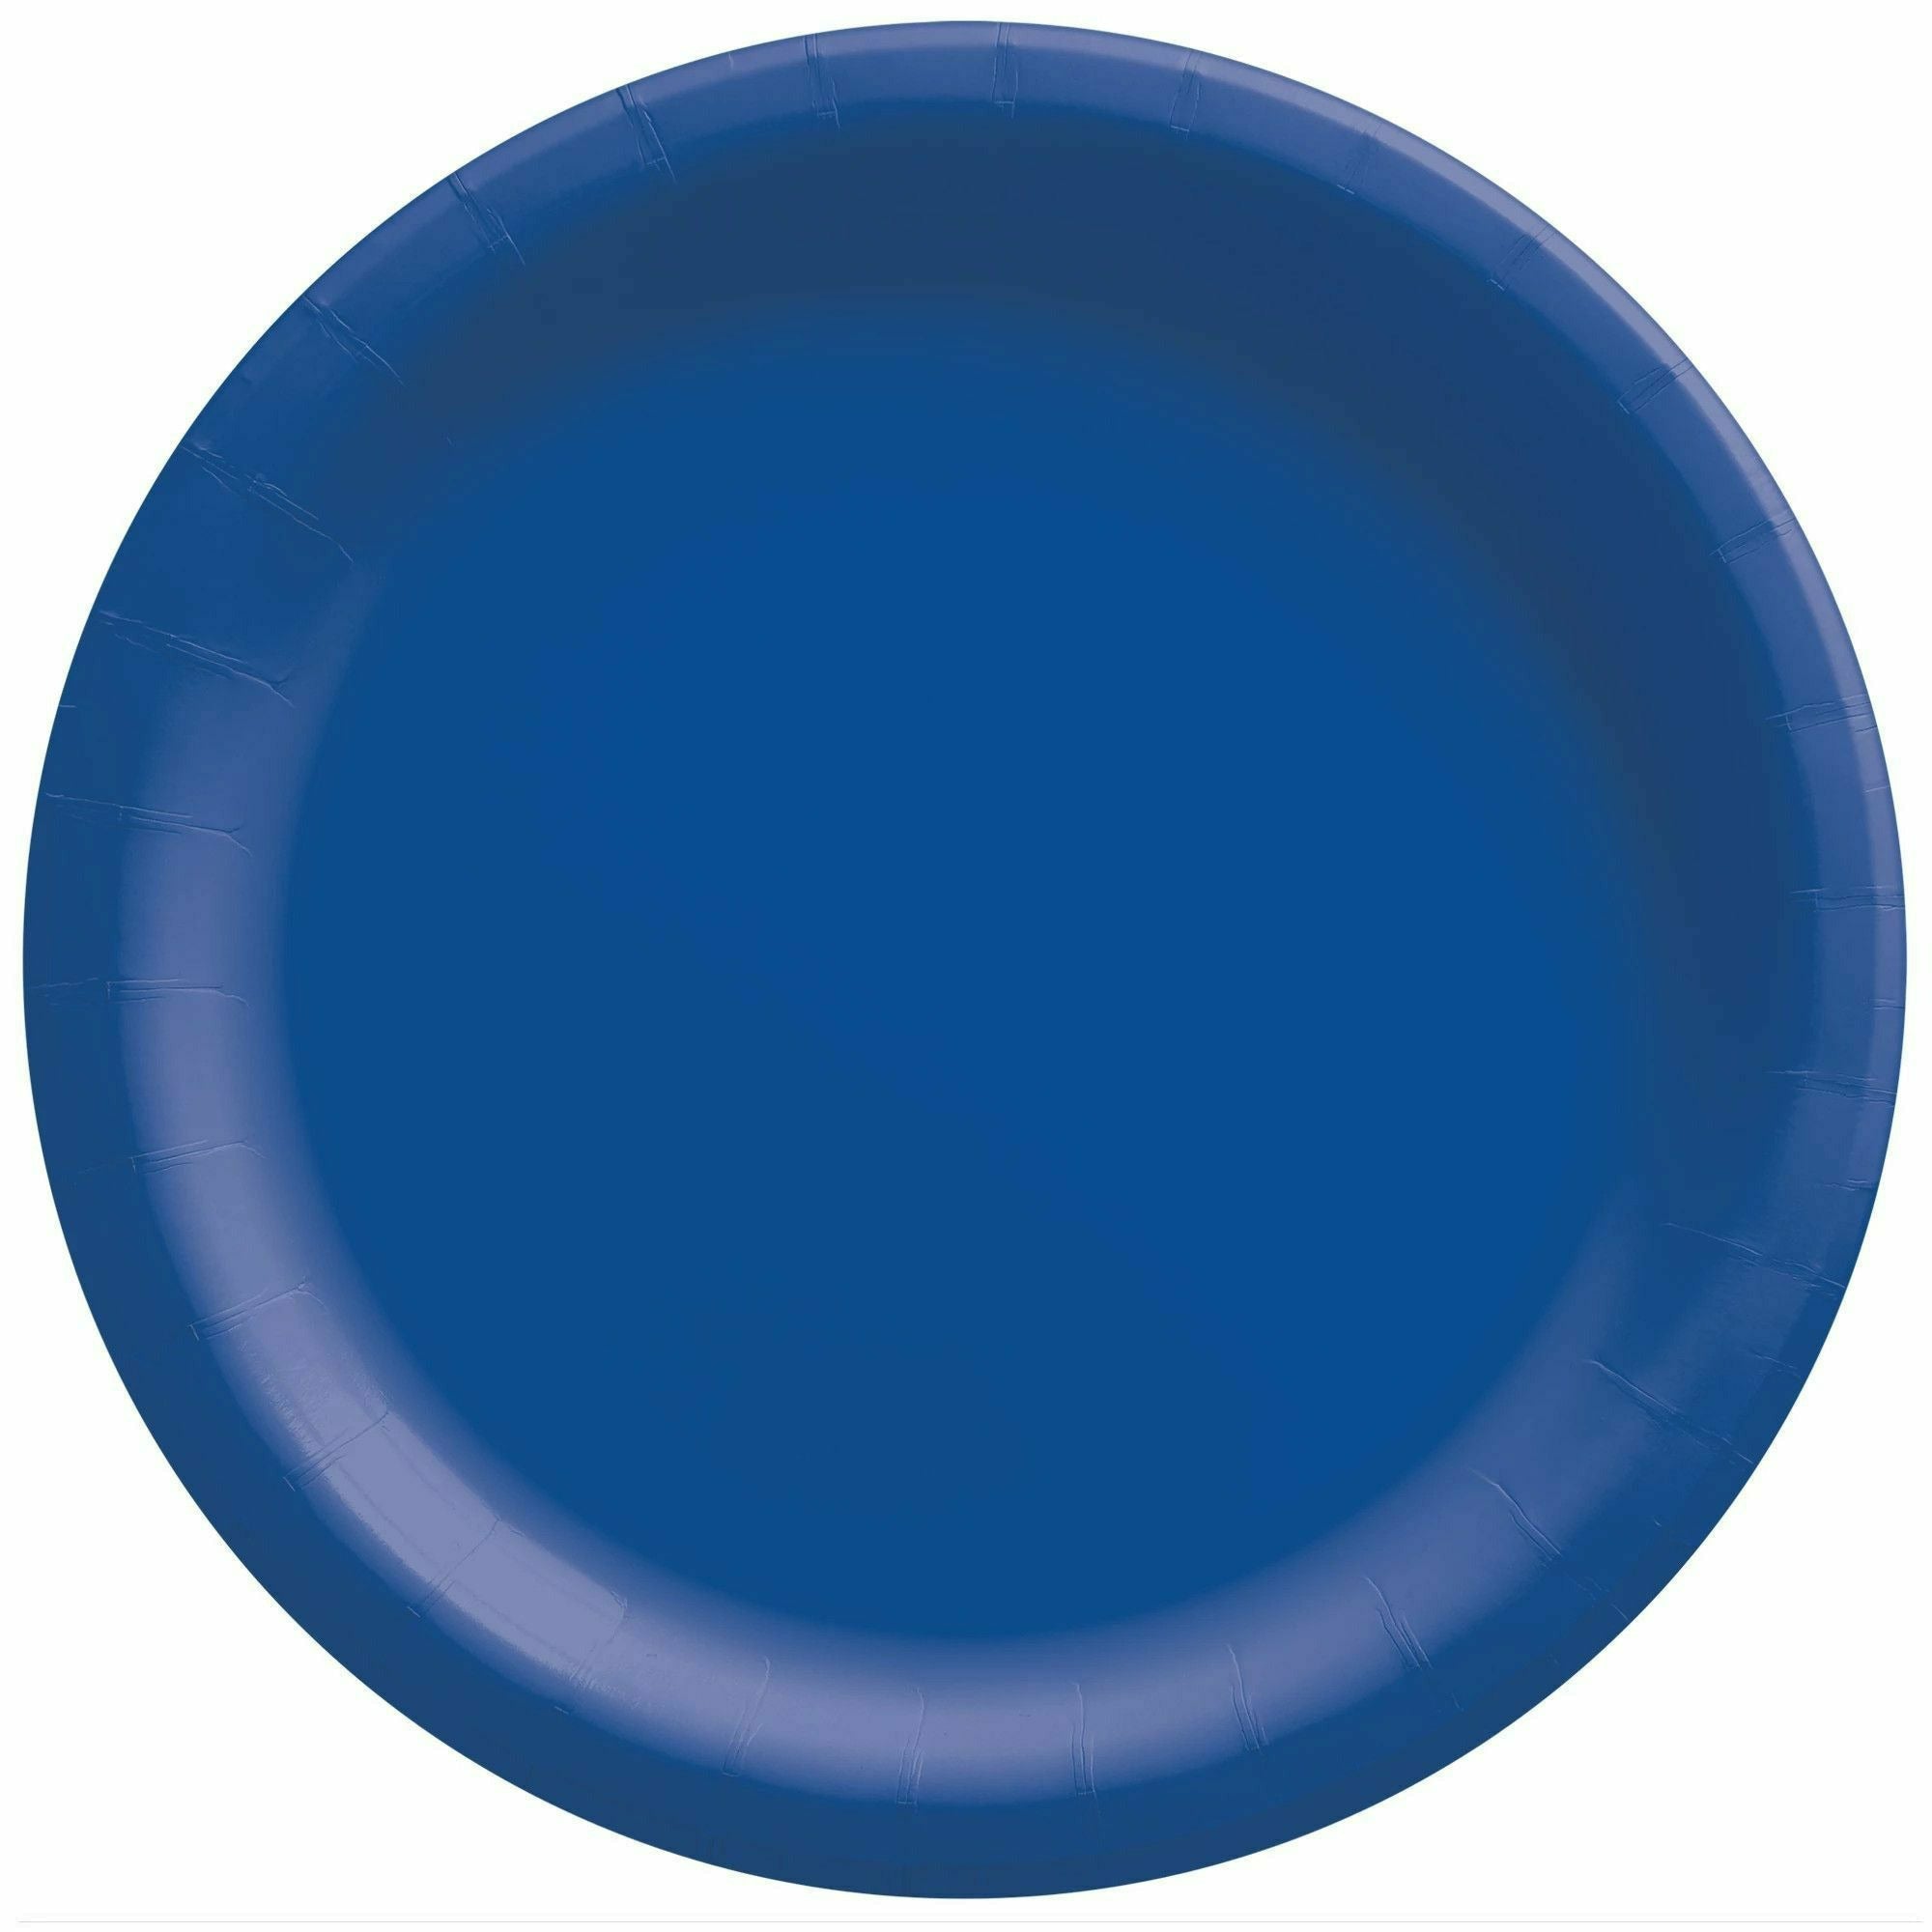 Amscan BASIC Bright Royal Blue - 6 3/4" Round Paper Plates, 20 Ct.